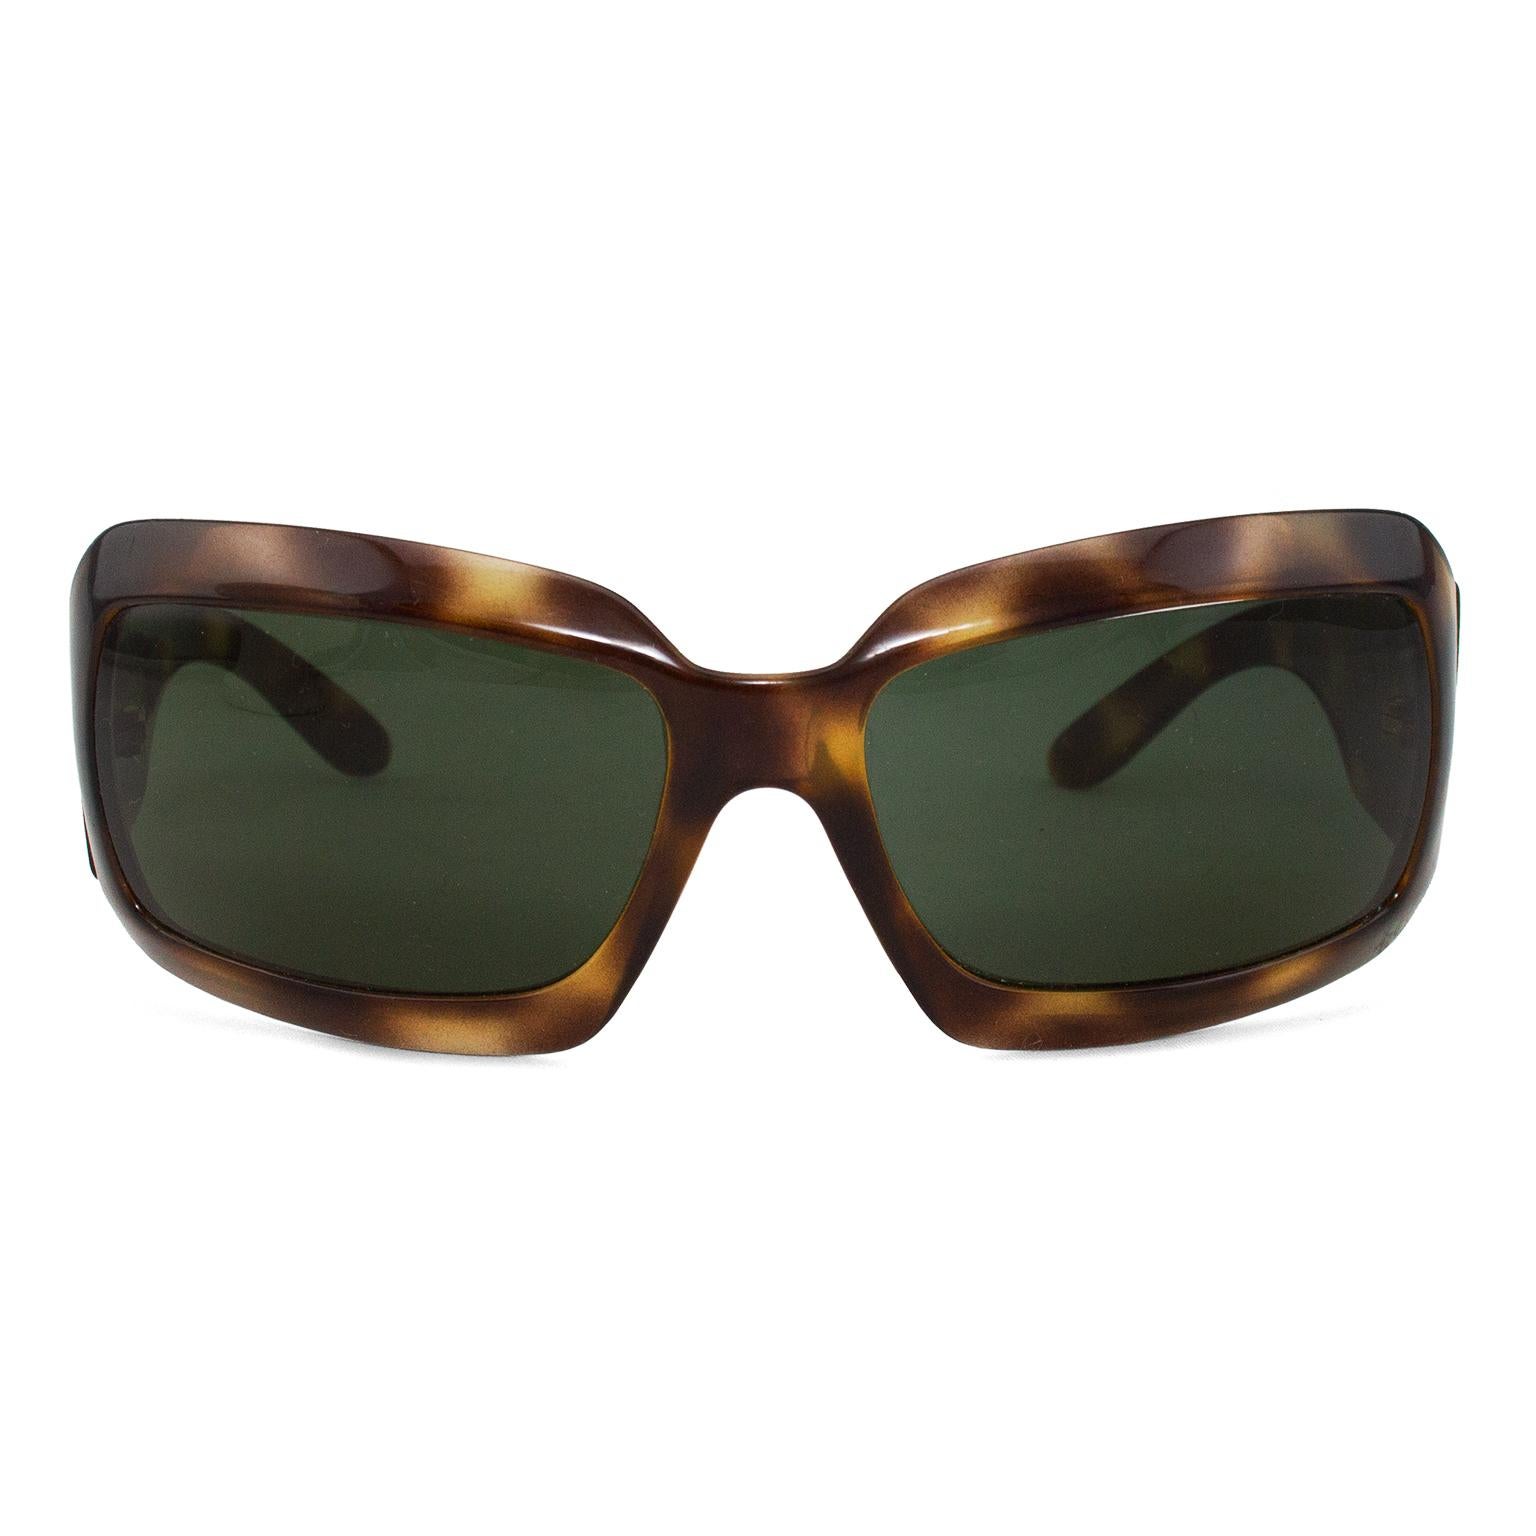 CHANEL S/S 2007 Black Round Half-tint Sunglasses S5018 Wavy Arms CC Logo.